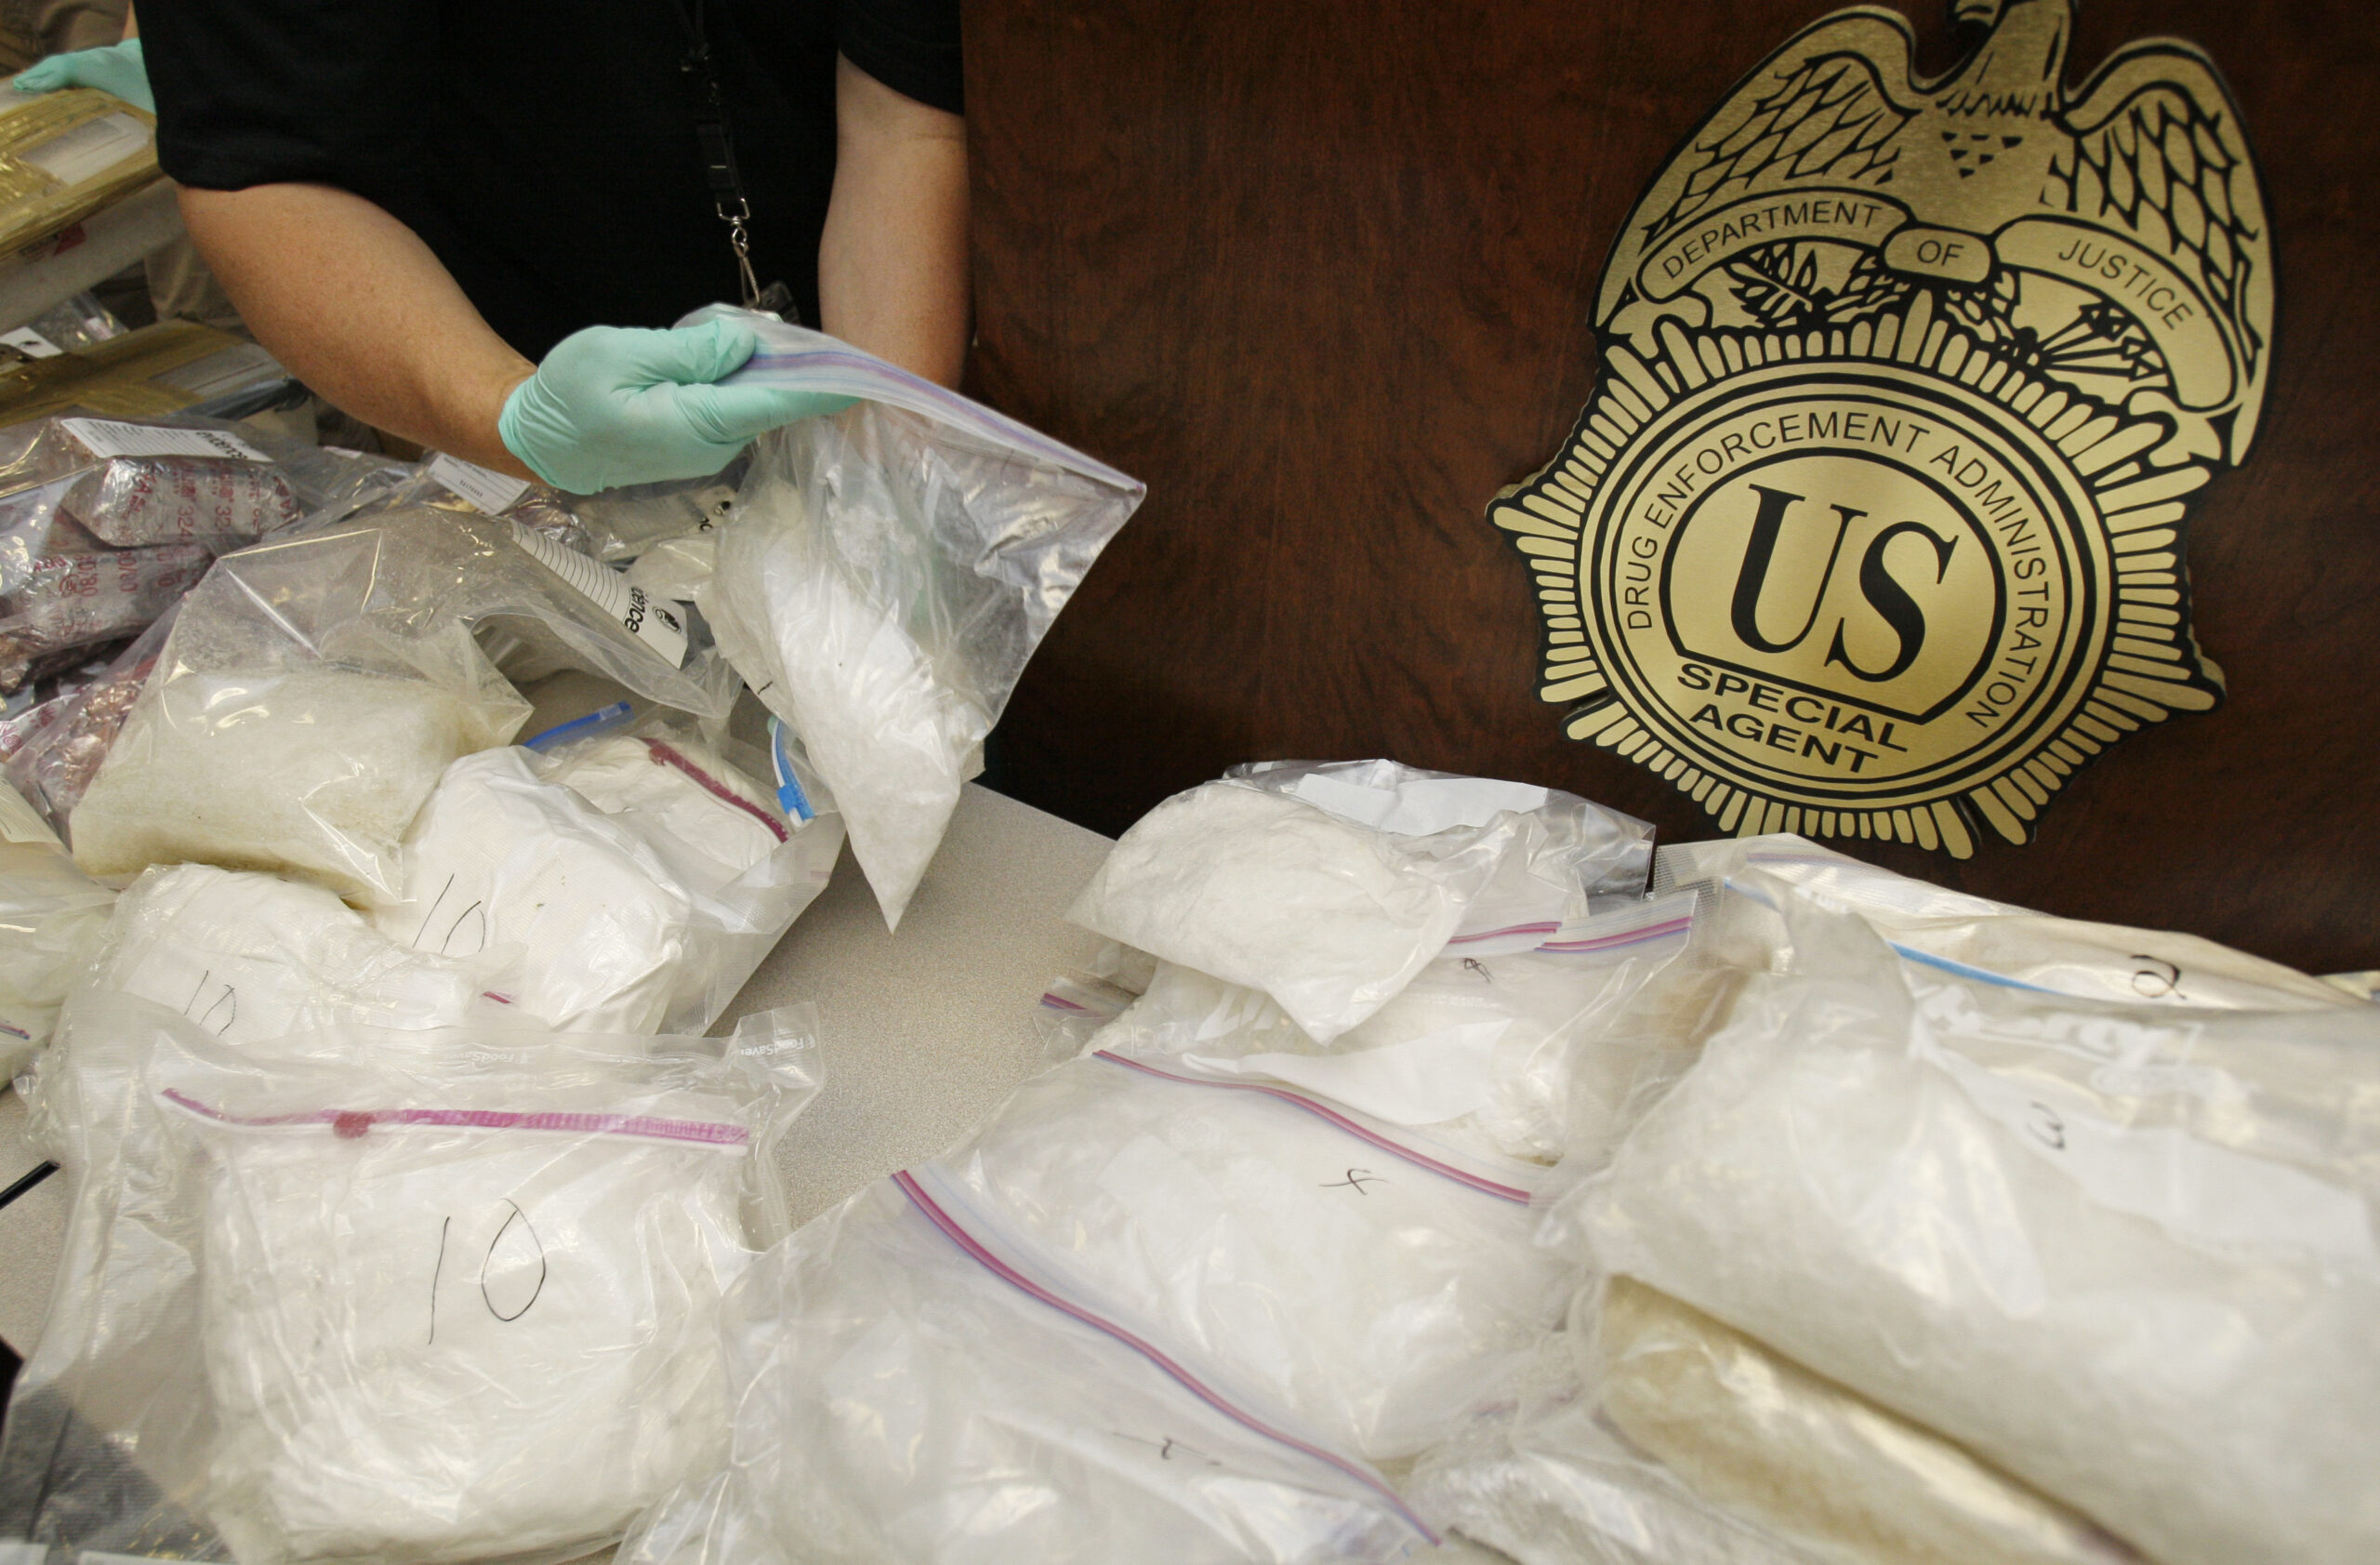 Bags of methamphetamine at the U.S. DEA